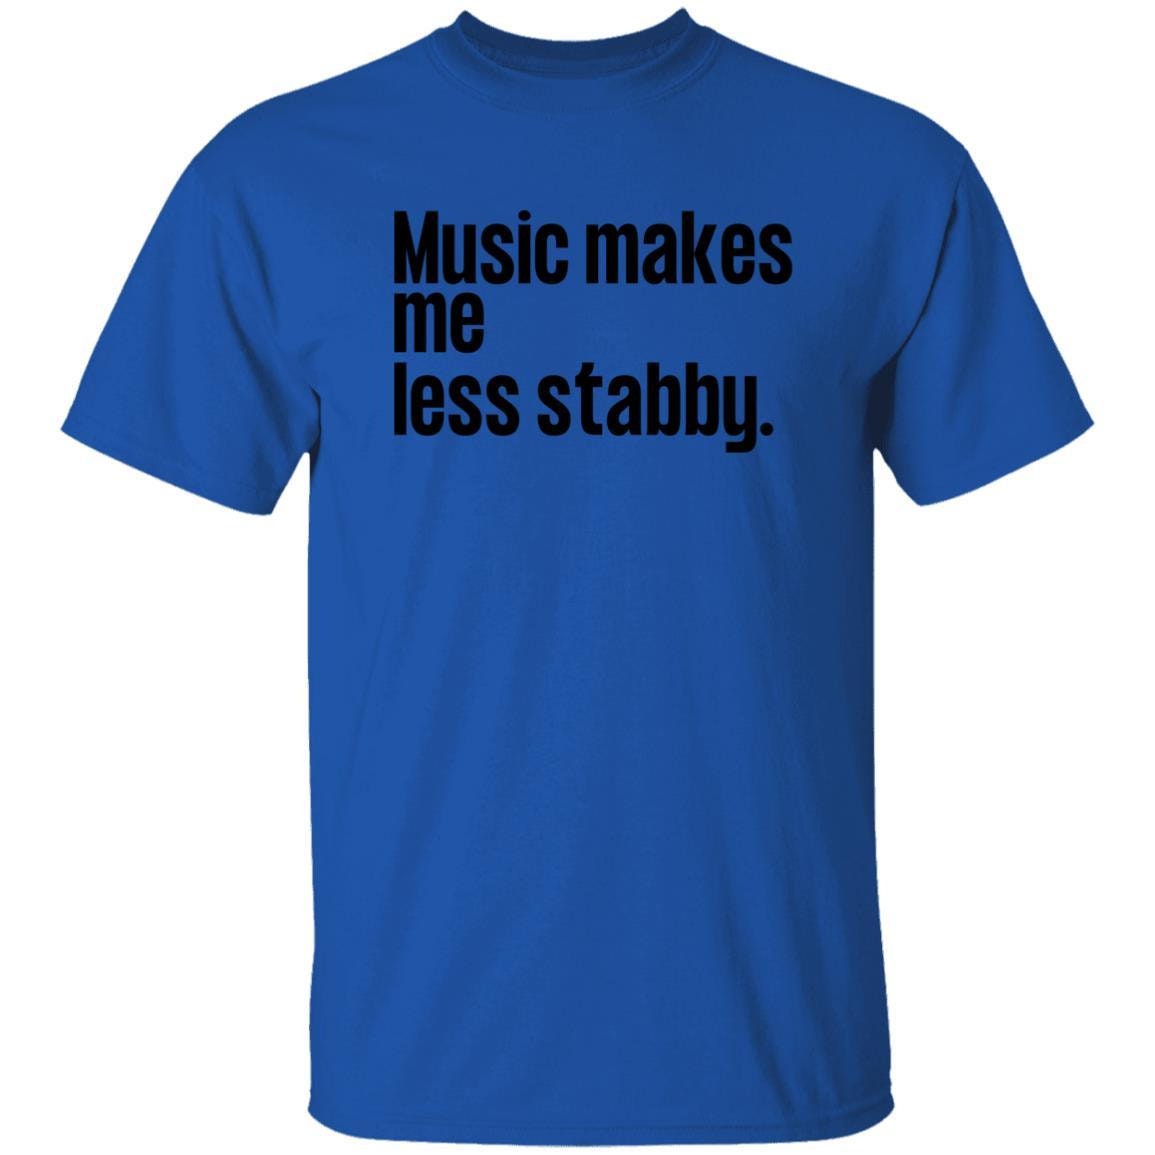 Music makes me less stabby T-Shirt